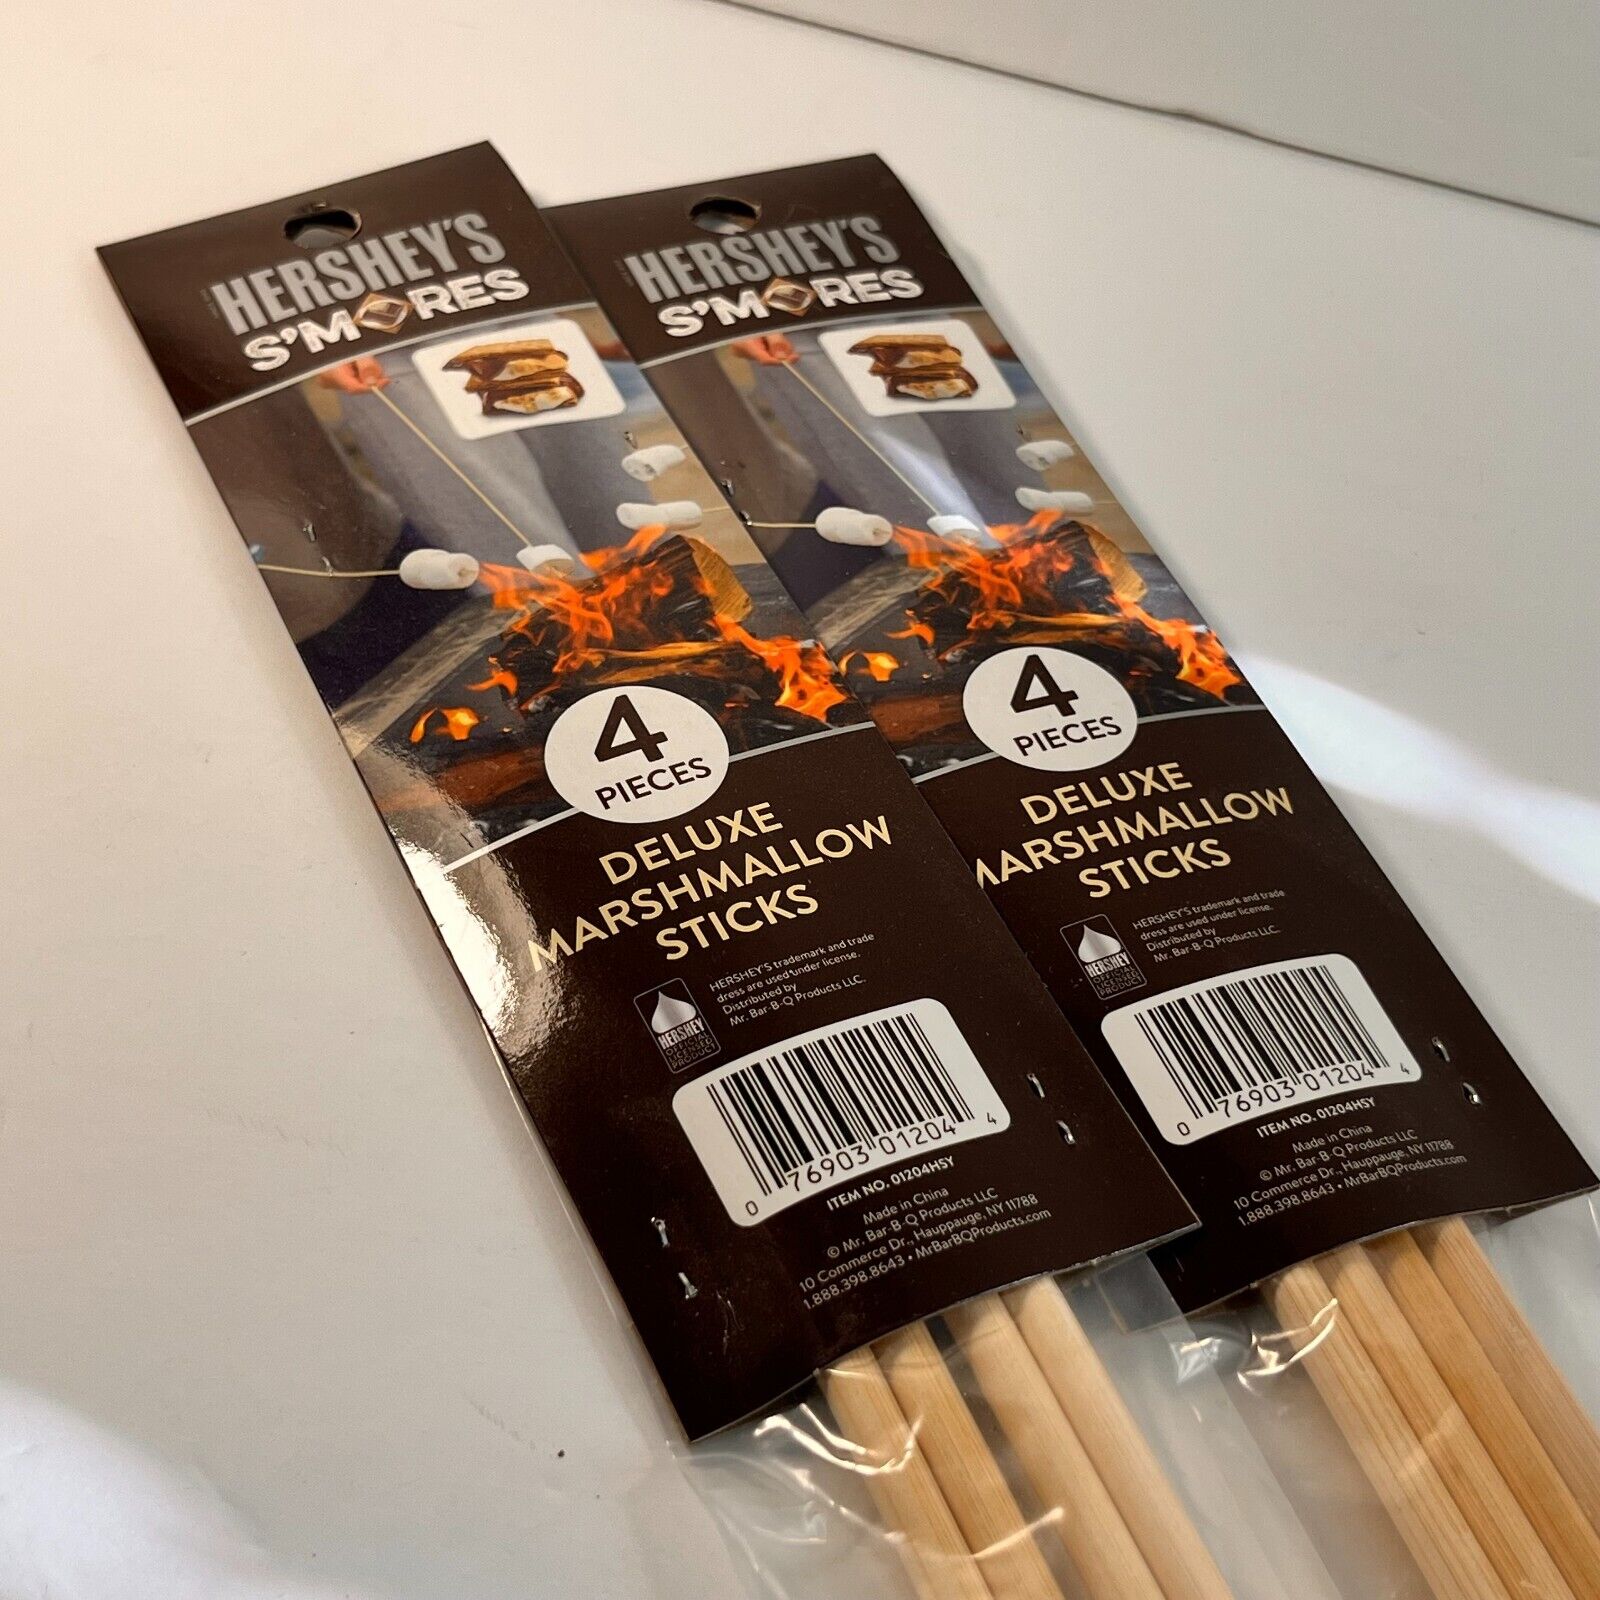 Hershey's Smores Deluxe Marshmallow Sticks 31